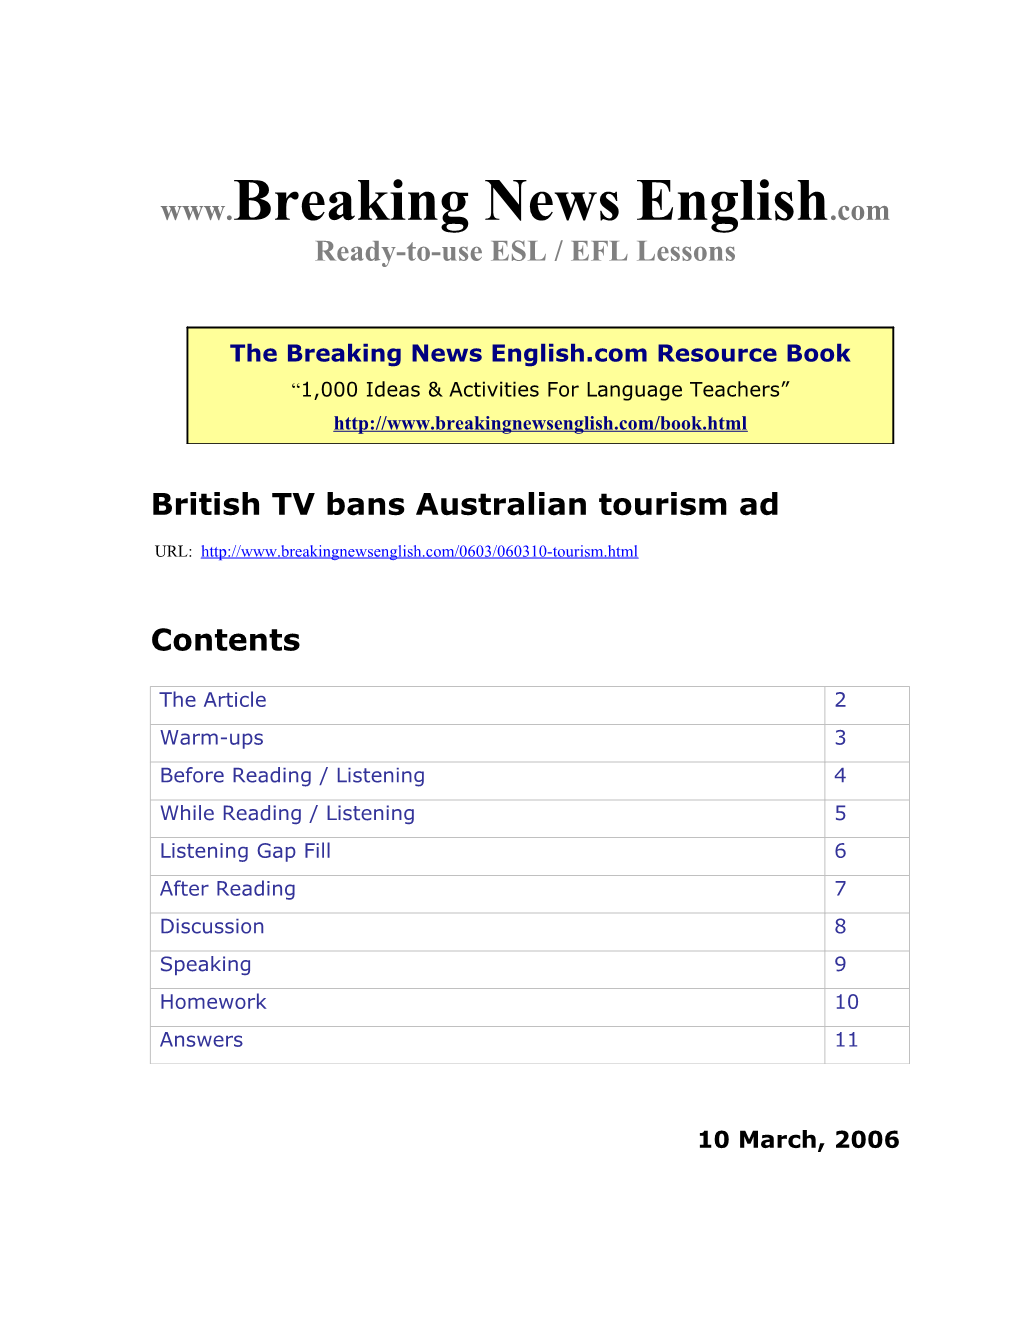 British TV Bans Australian Tourism Ad